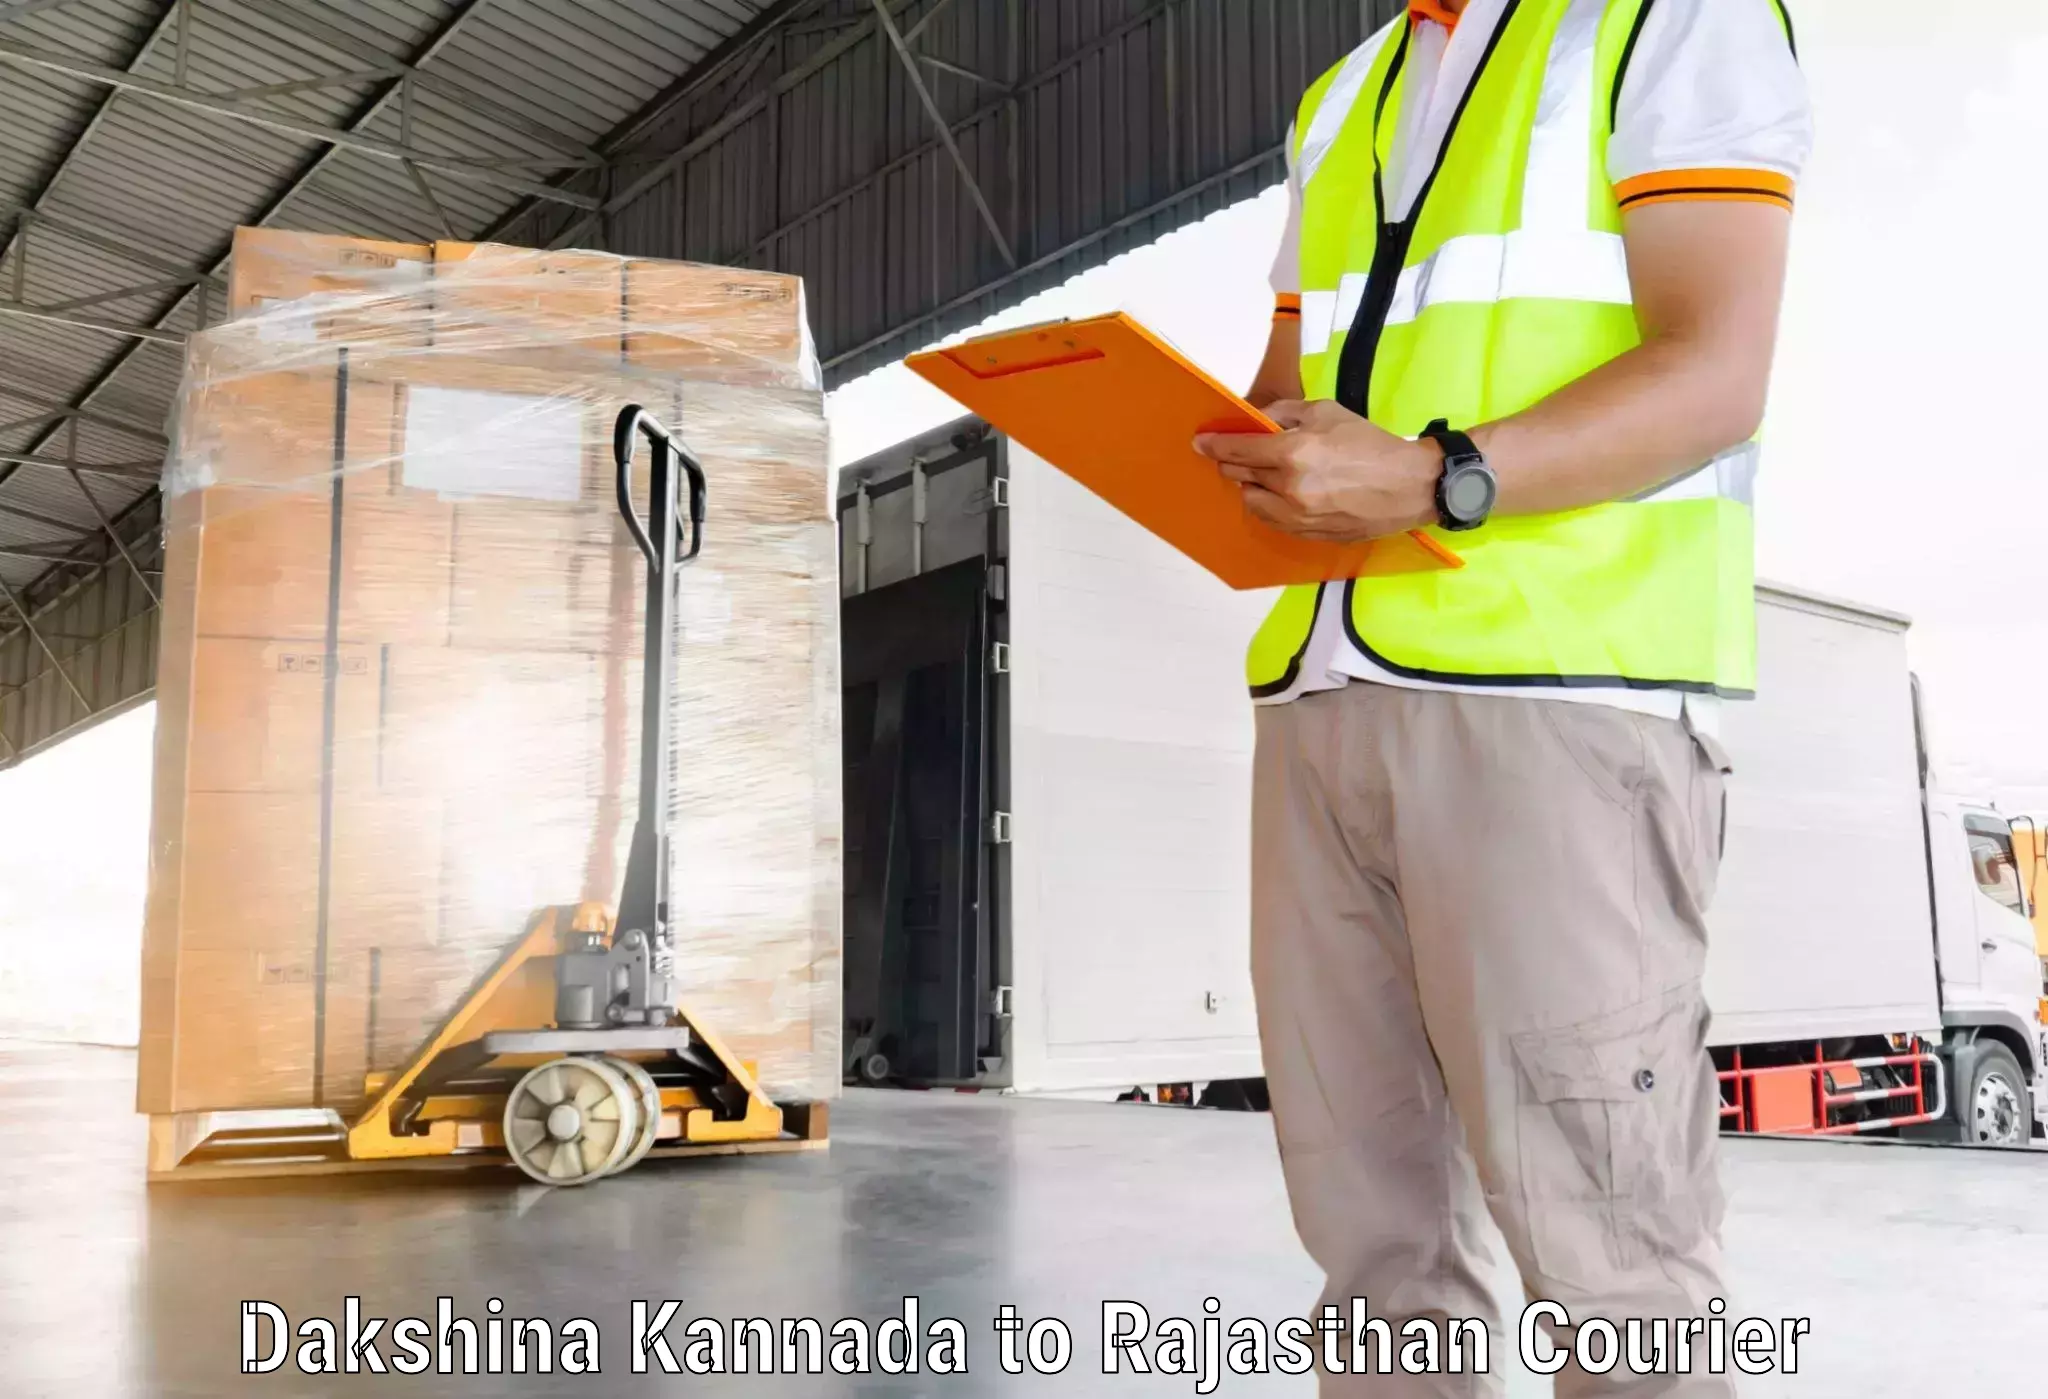 Global courier networks Dakshina Kannada to Anupgarh